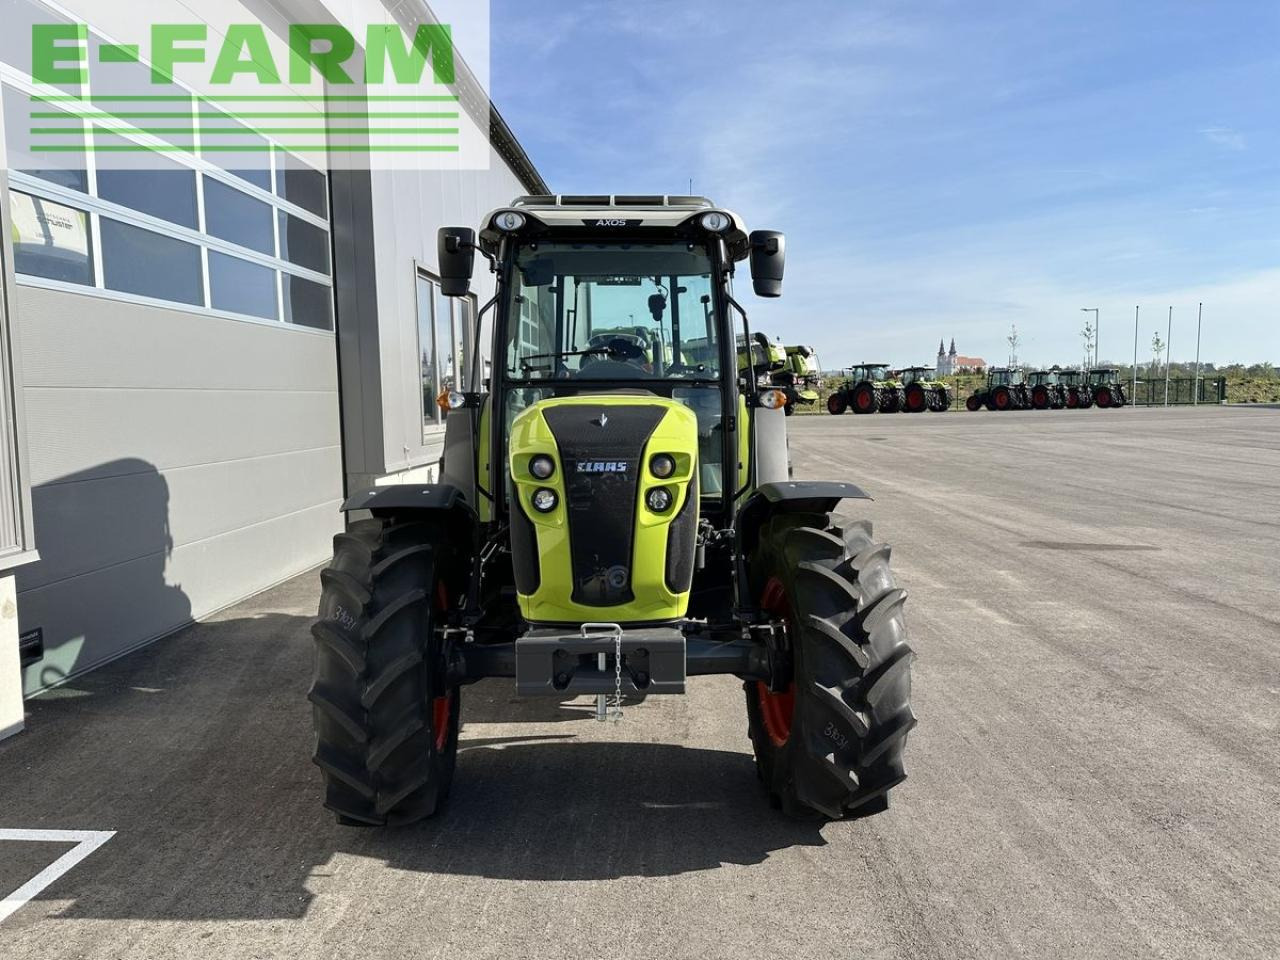 Farm tractor CLAAS axos 240